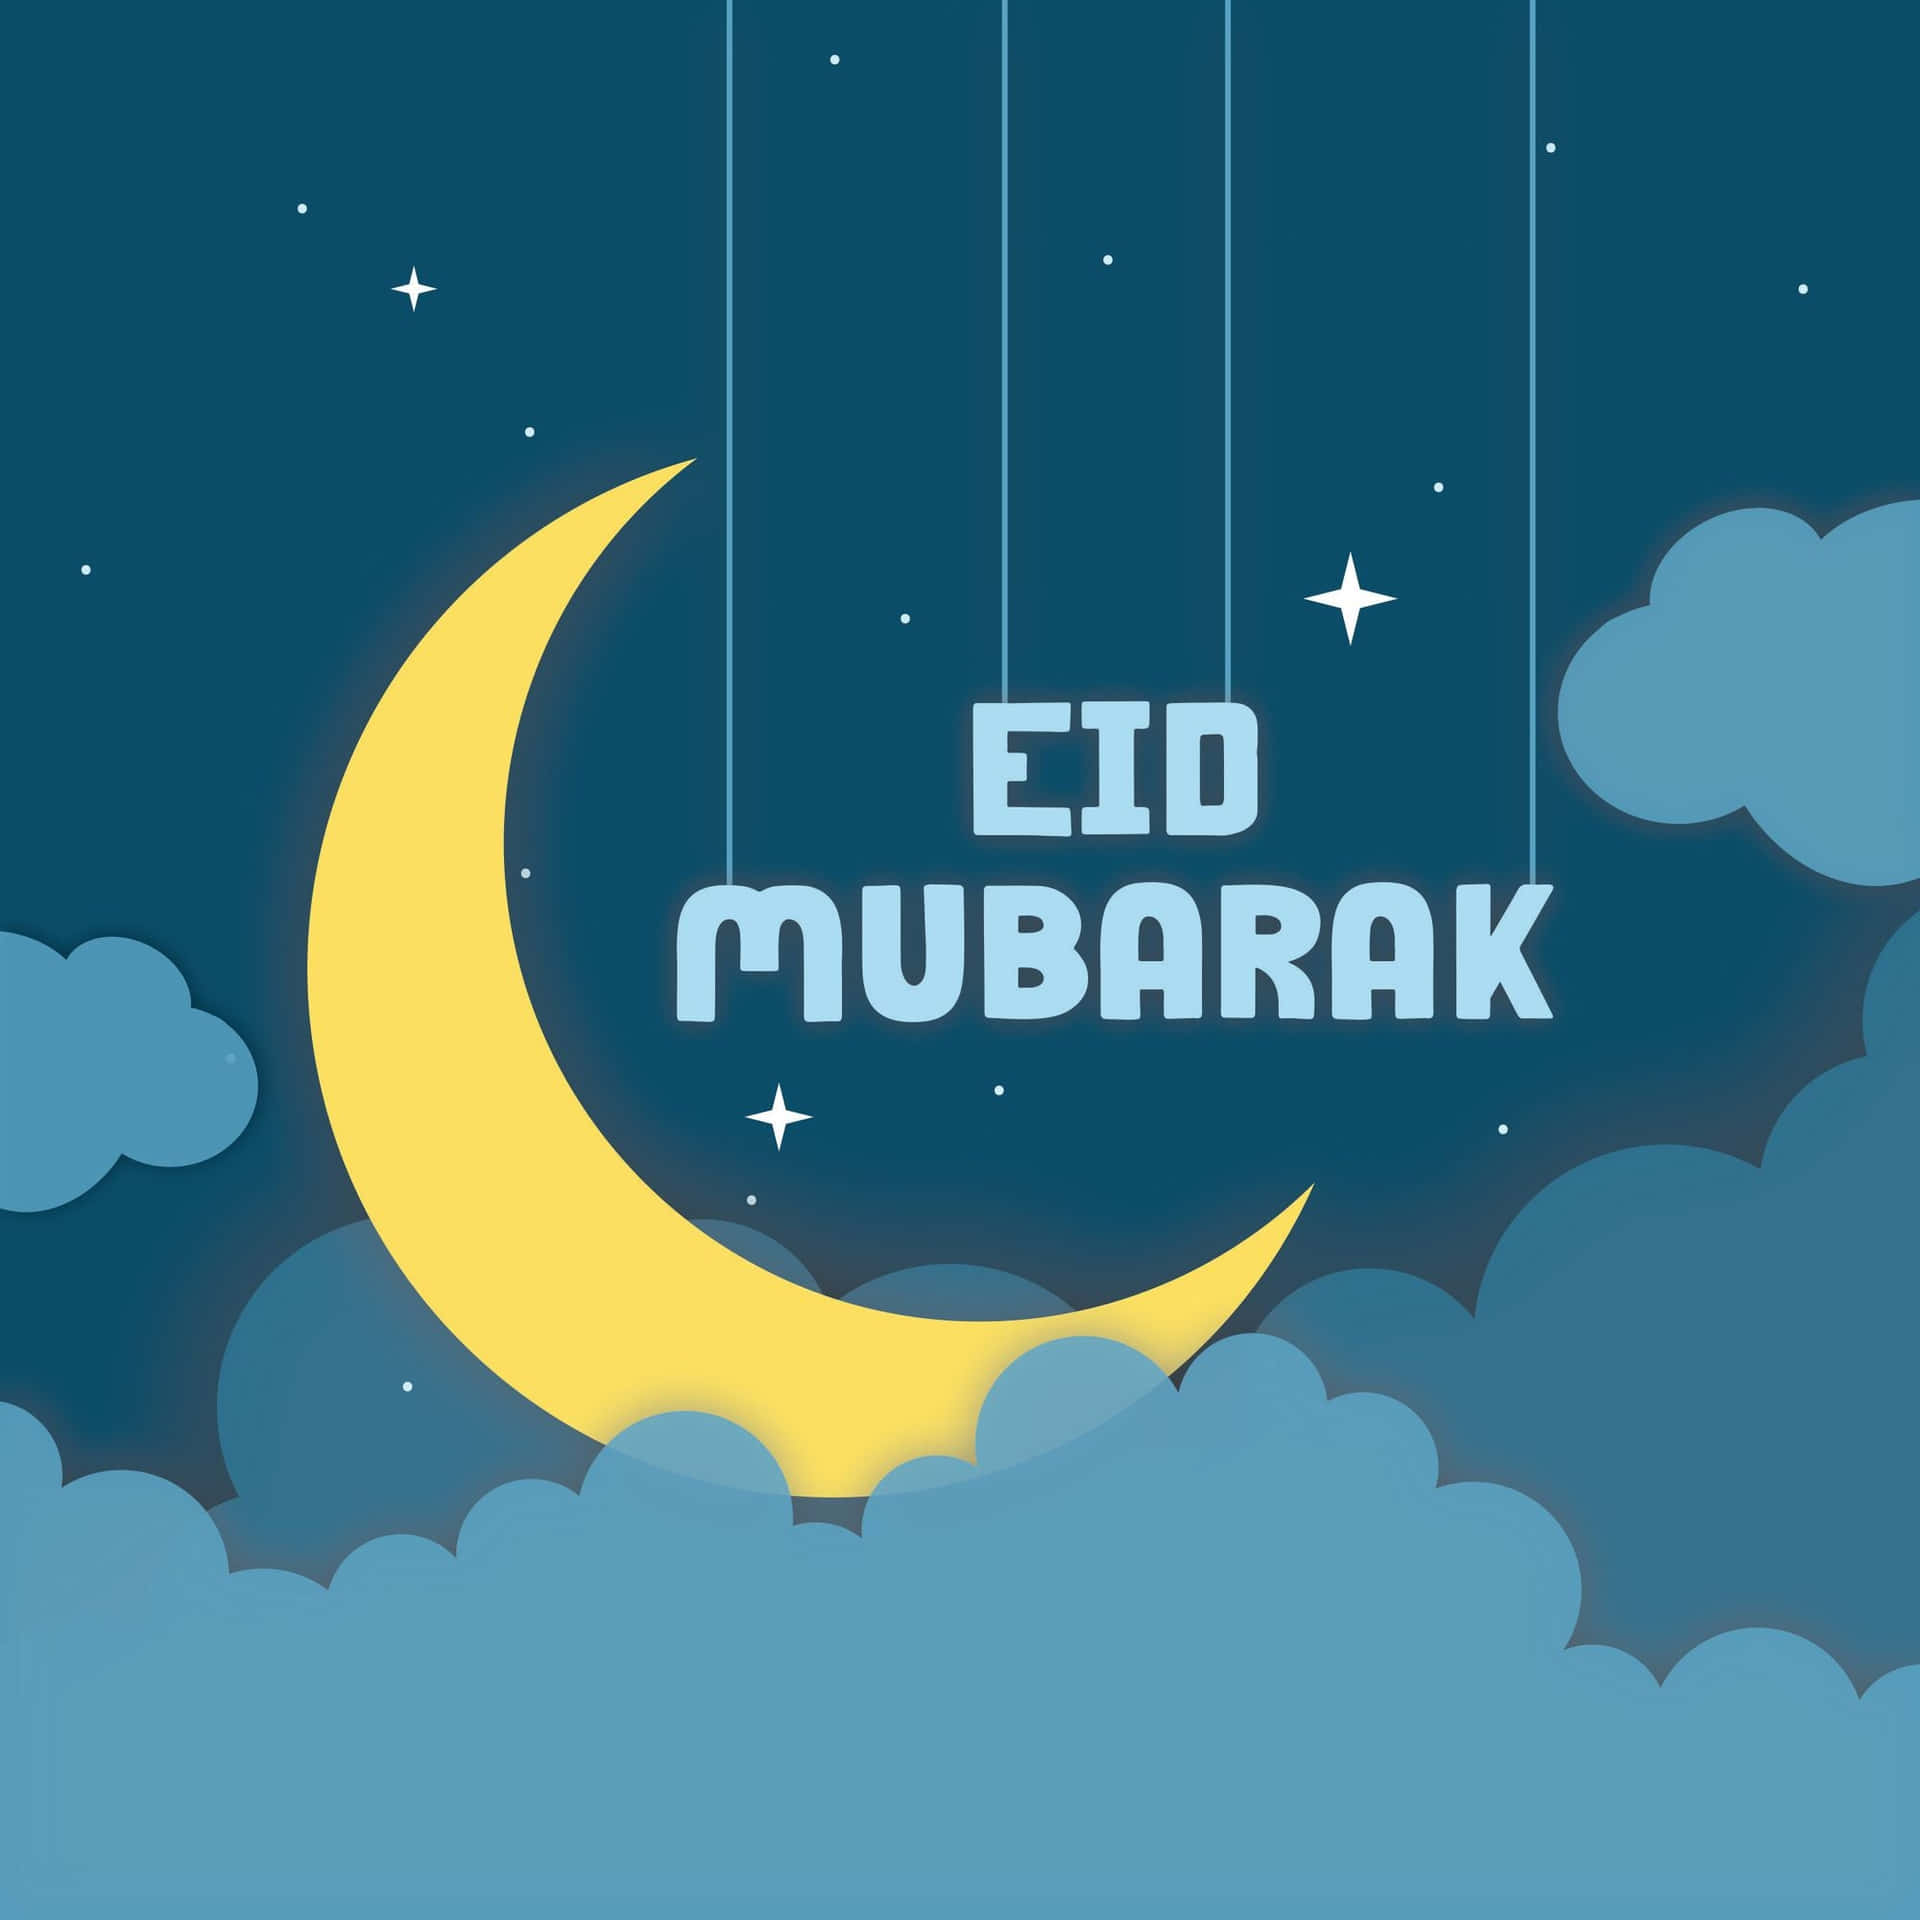 Wishing You a Happy Eid Mubarak!